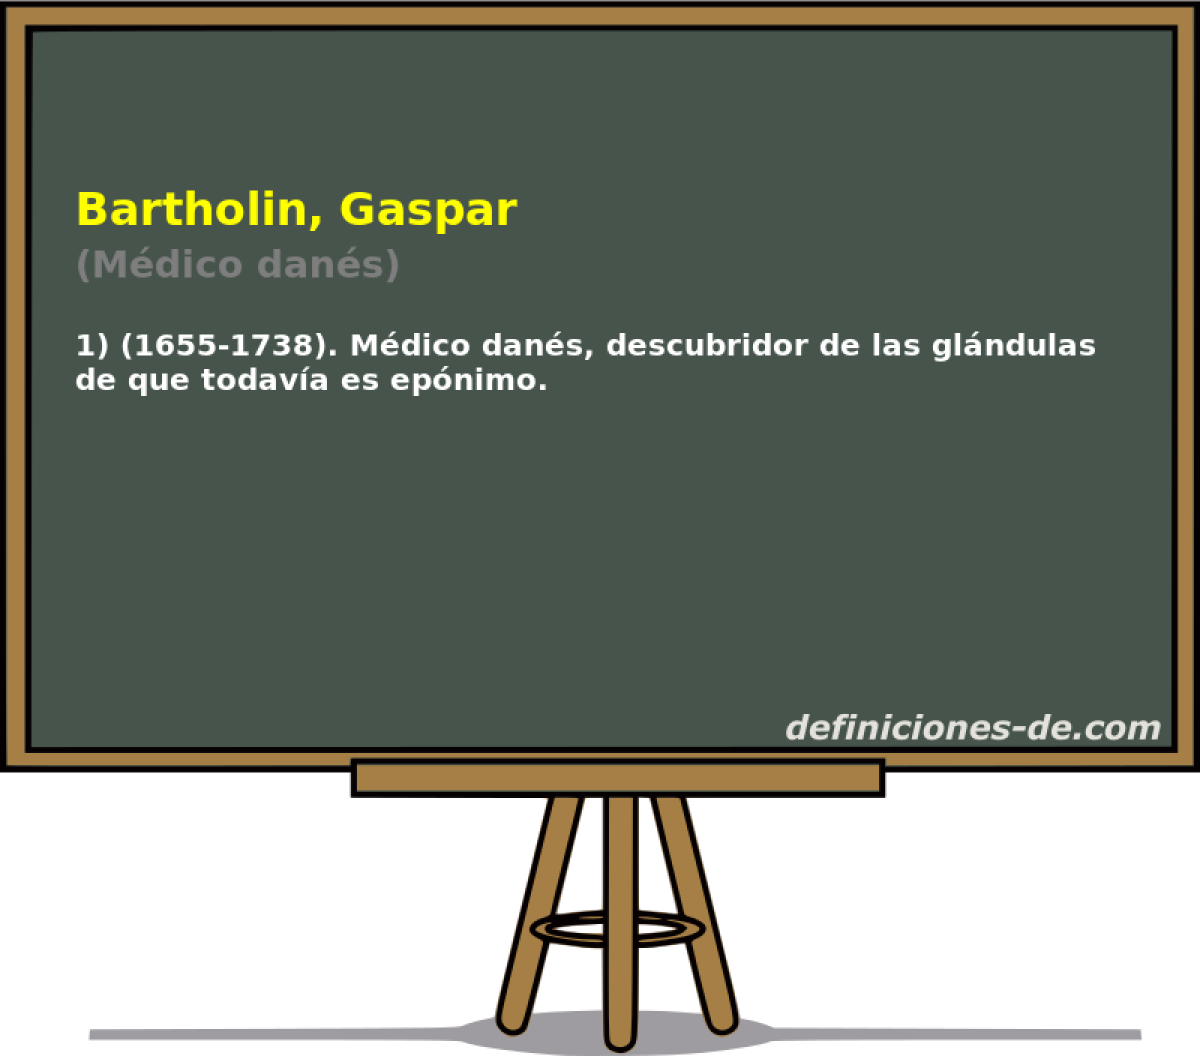 Bartholin, Gaspar (Mdico dans)